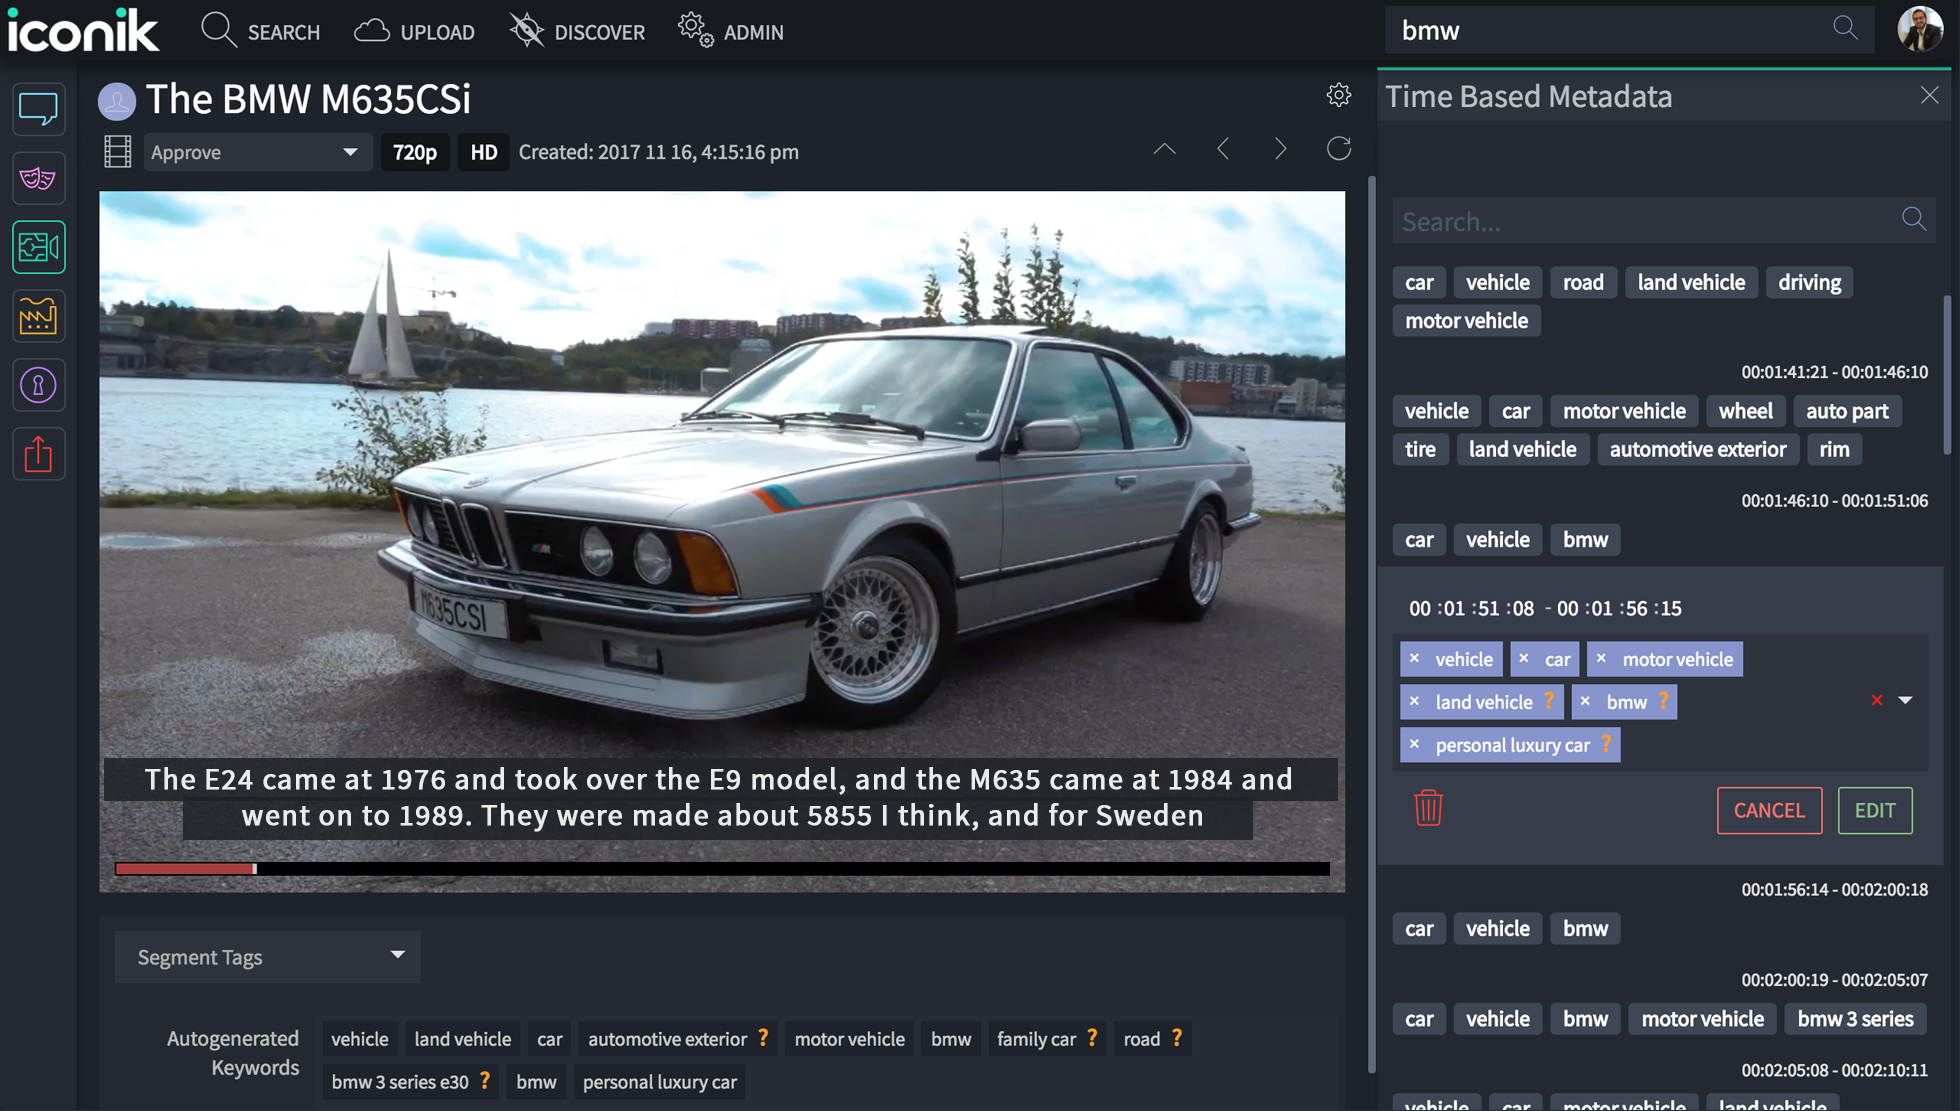 iconik MAM example displaying meta data for a BMW M635CSi